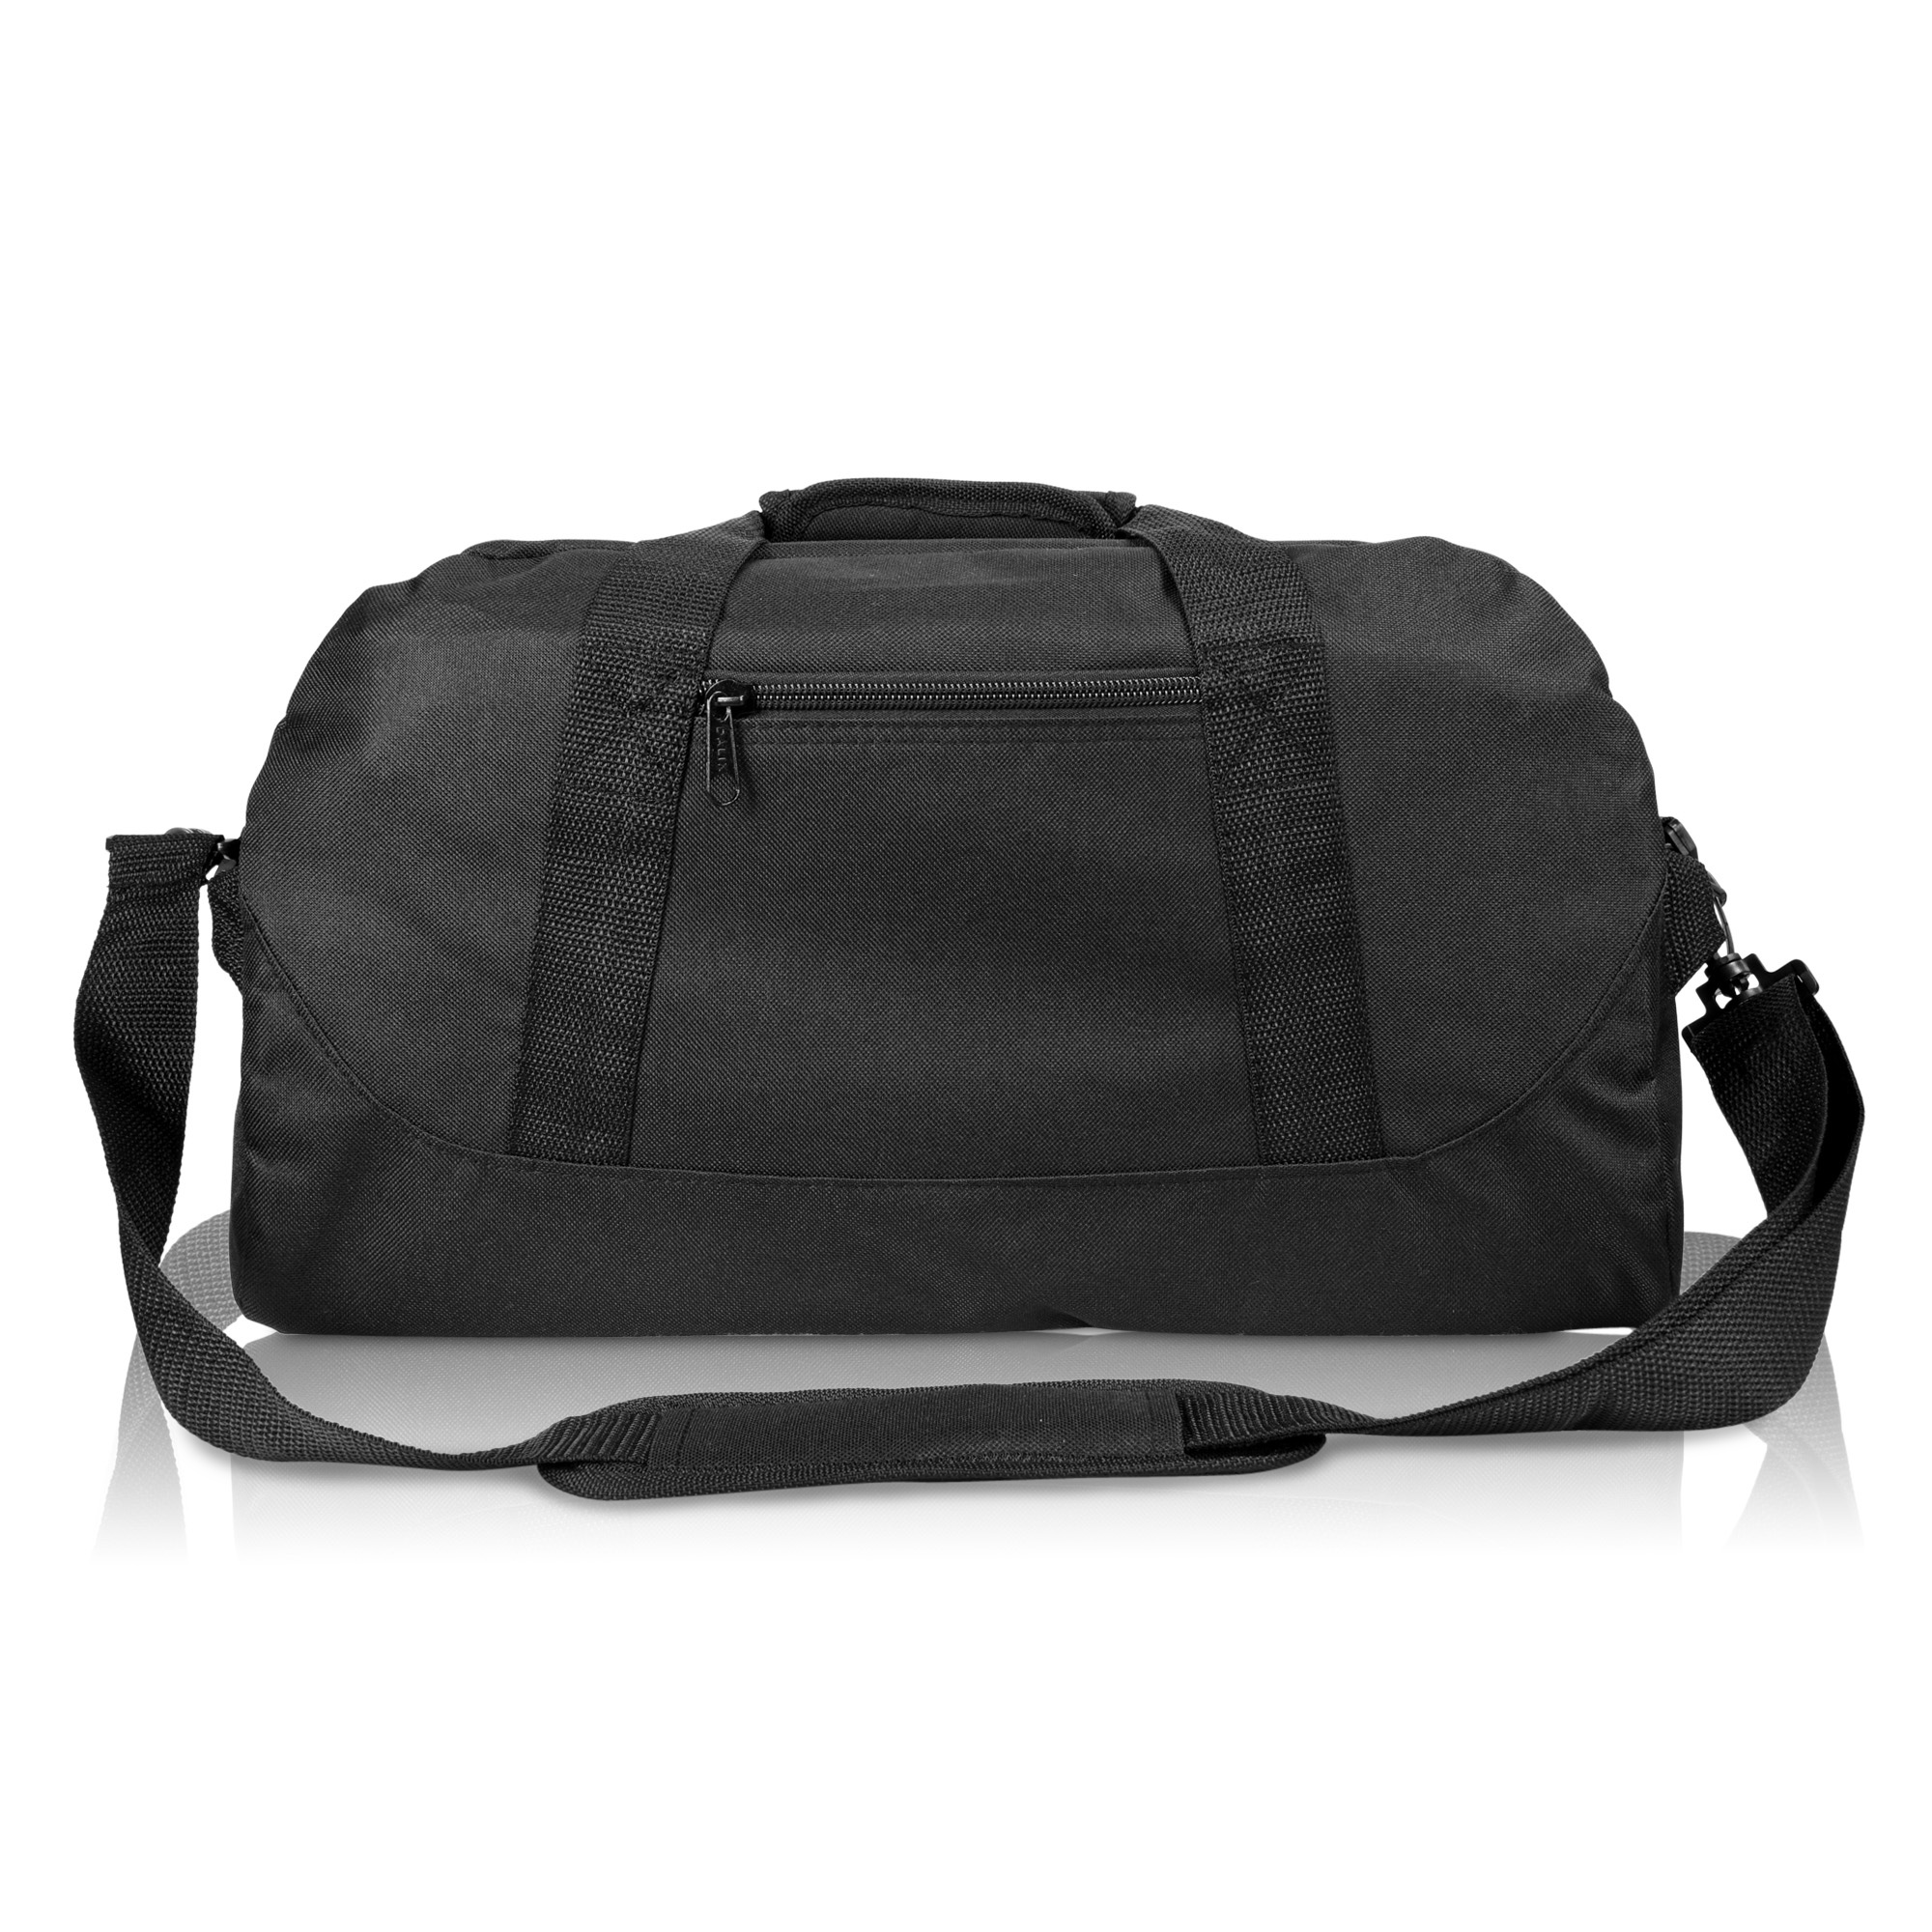 DALIX 18" Duffle Bag Two-Tone Sports Travel Gym Luggage Bag in Black - image 2 of 5